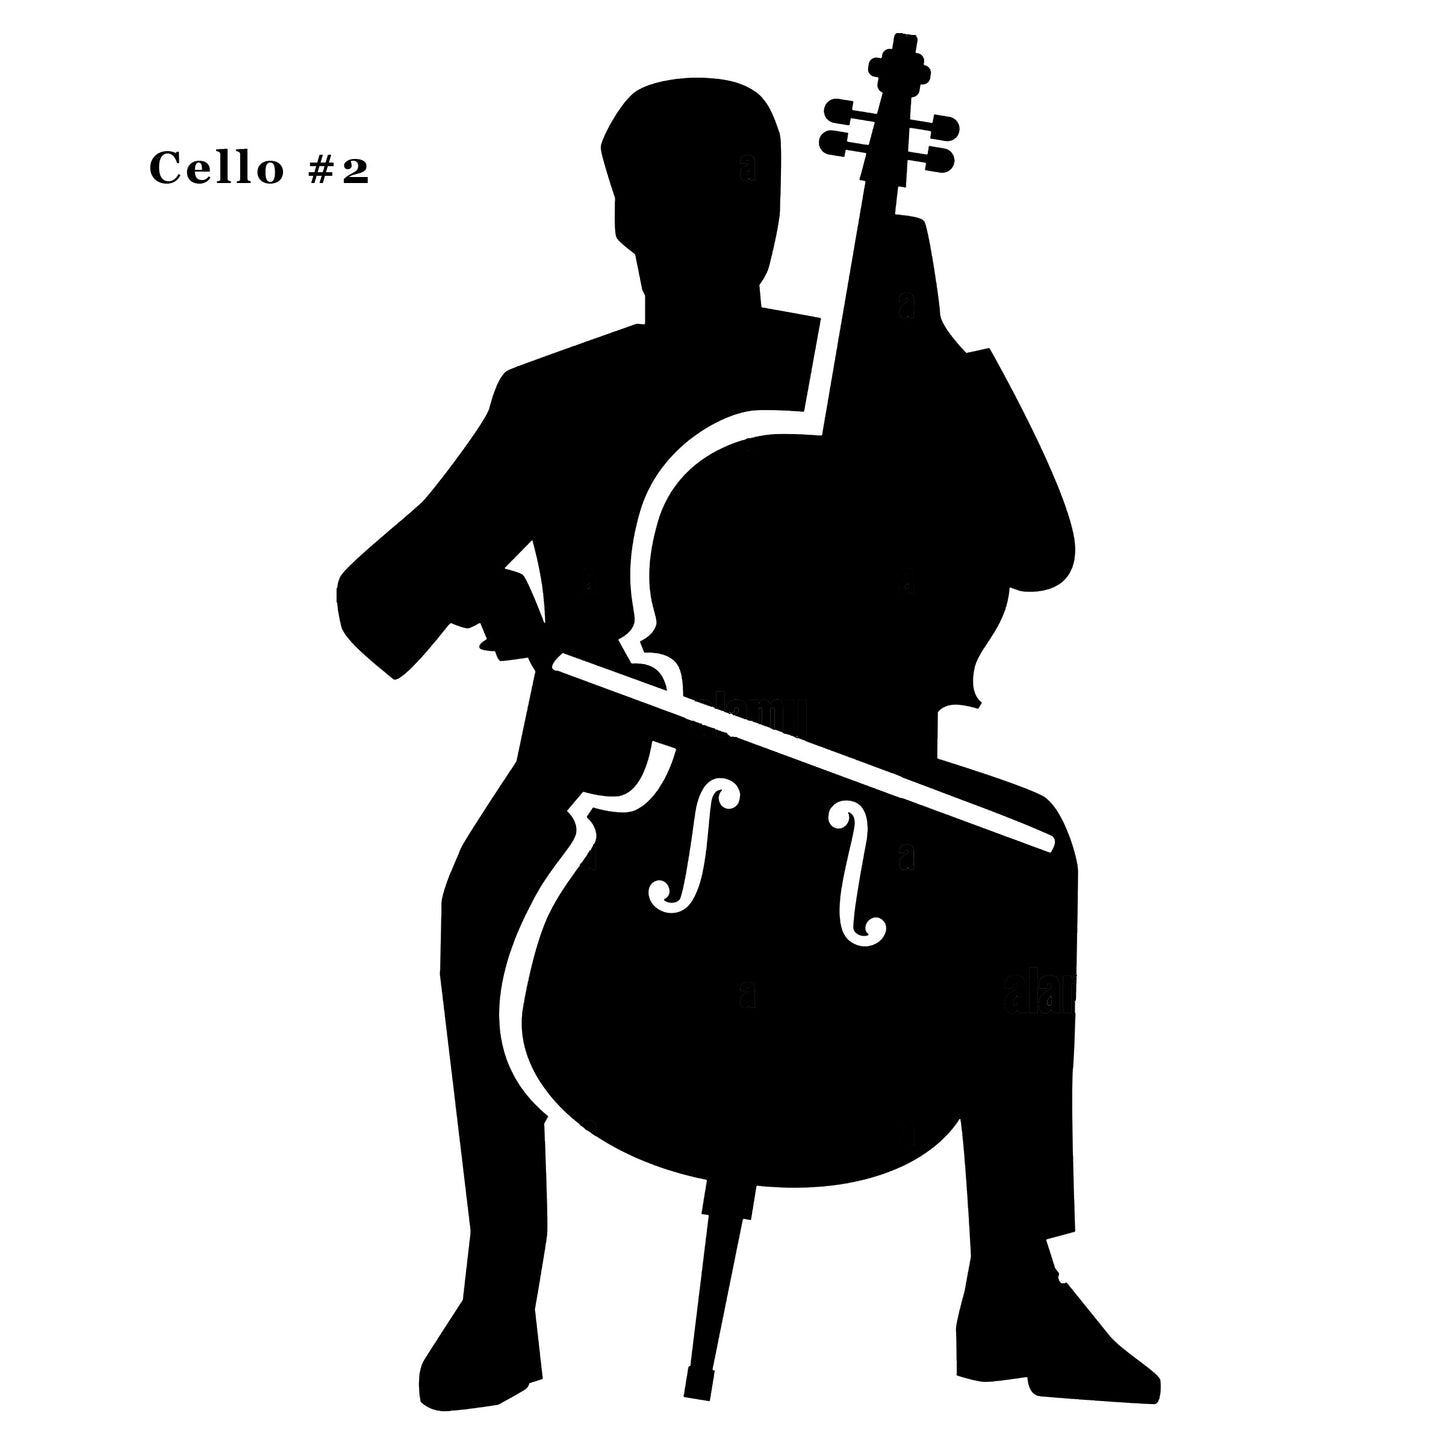 Cello - Lightweight Drawstring Bag.